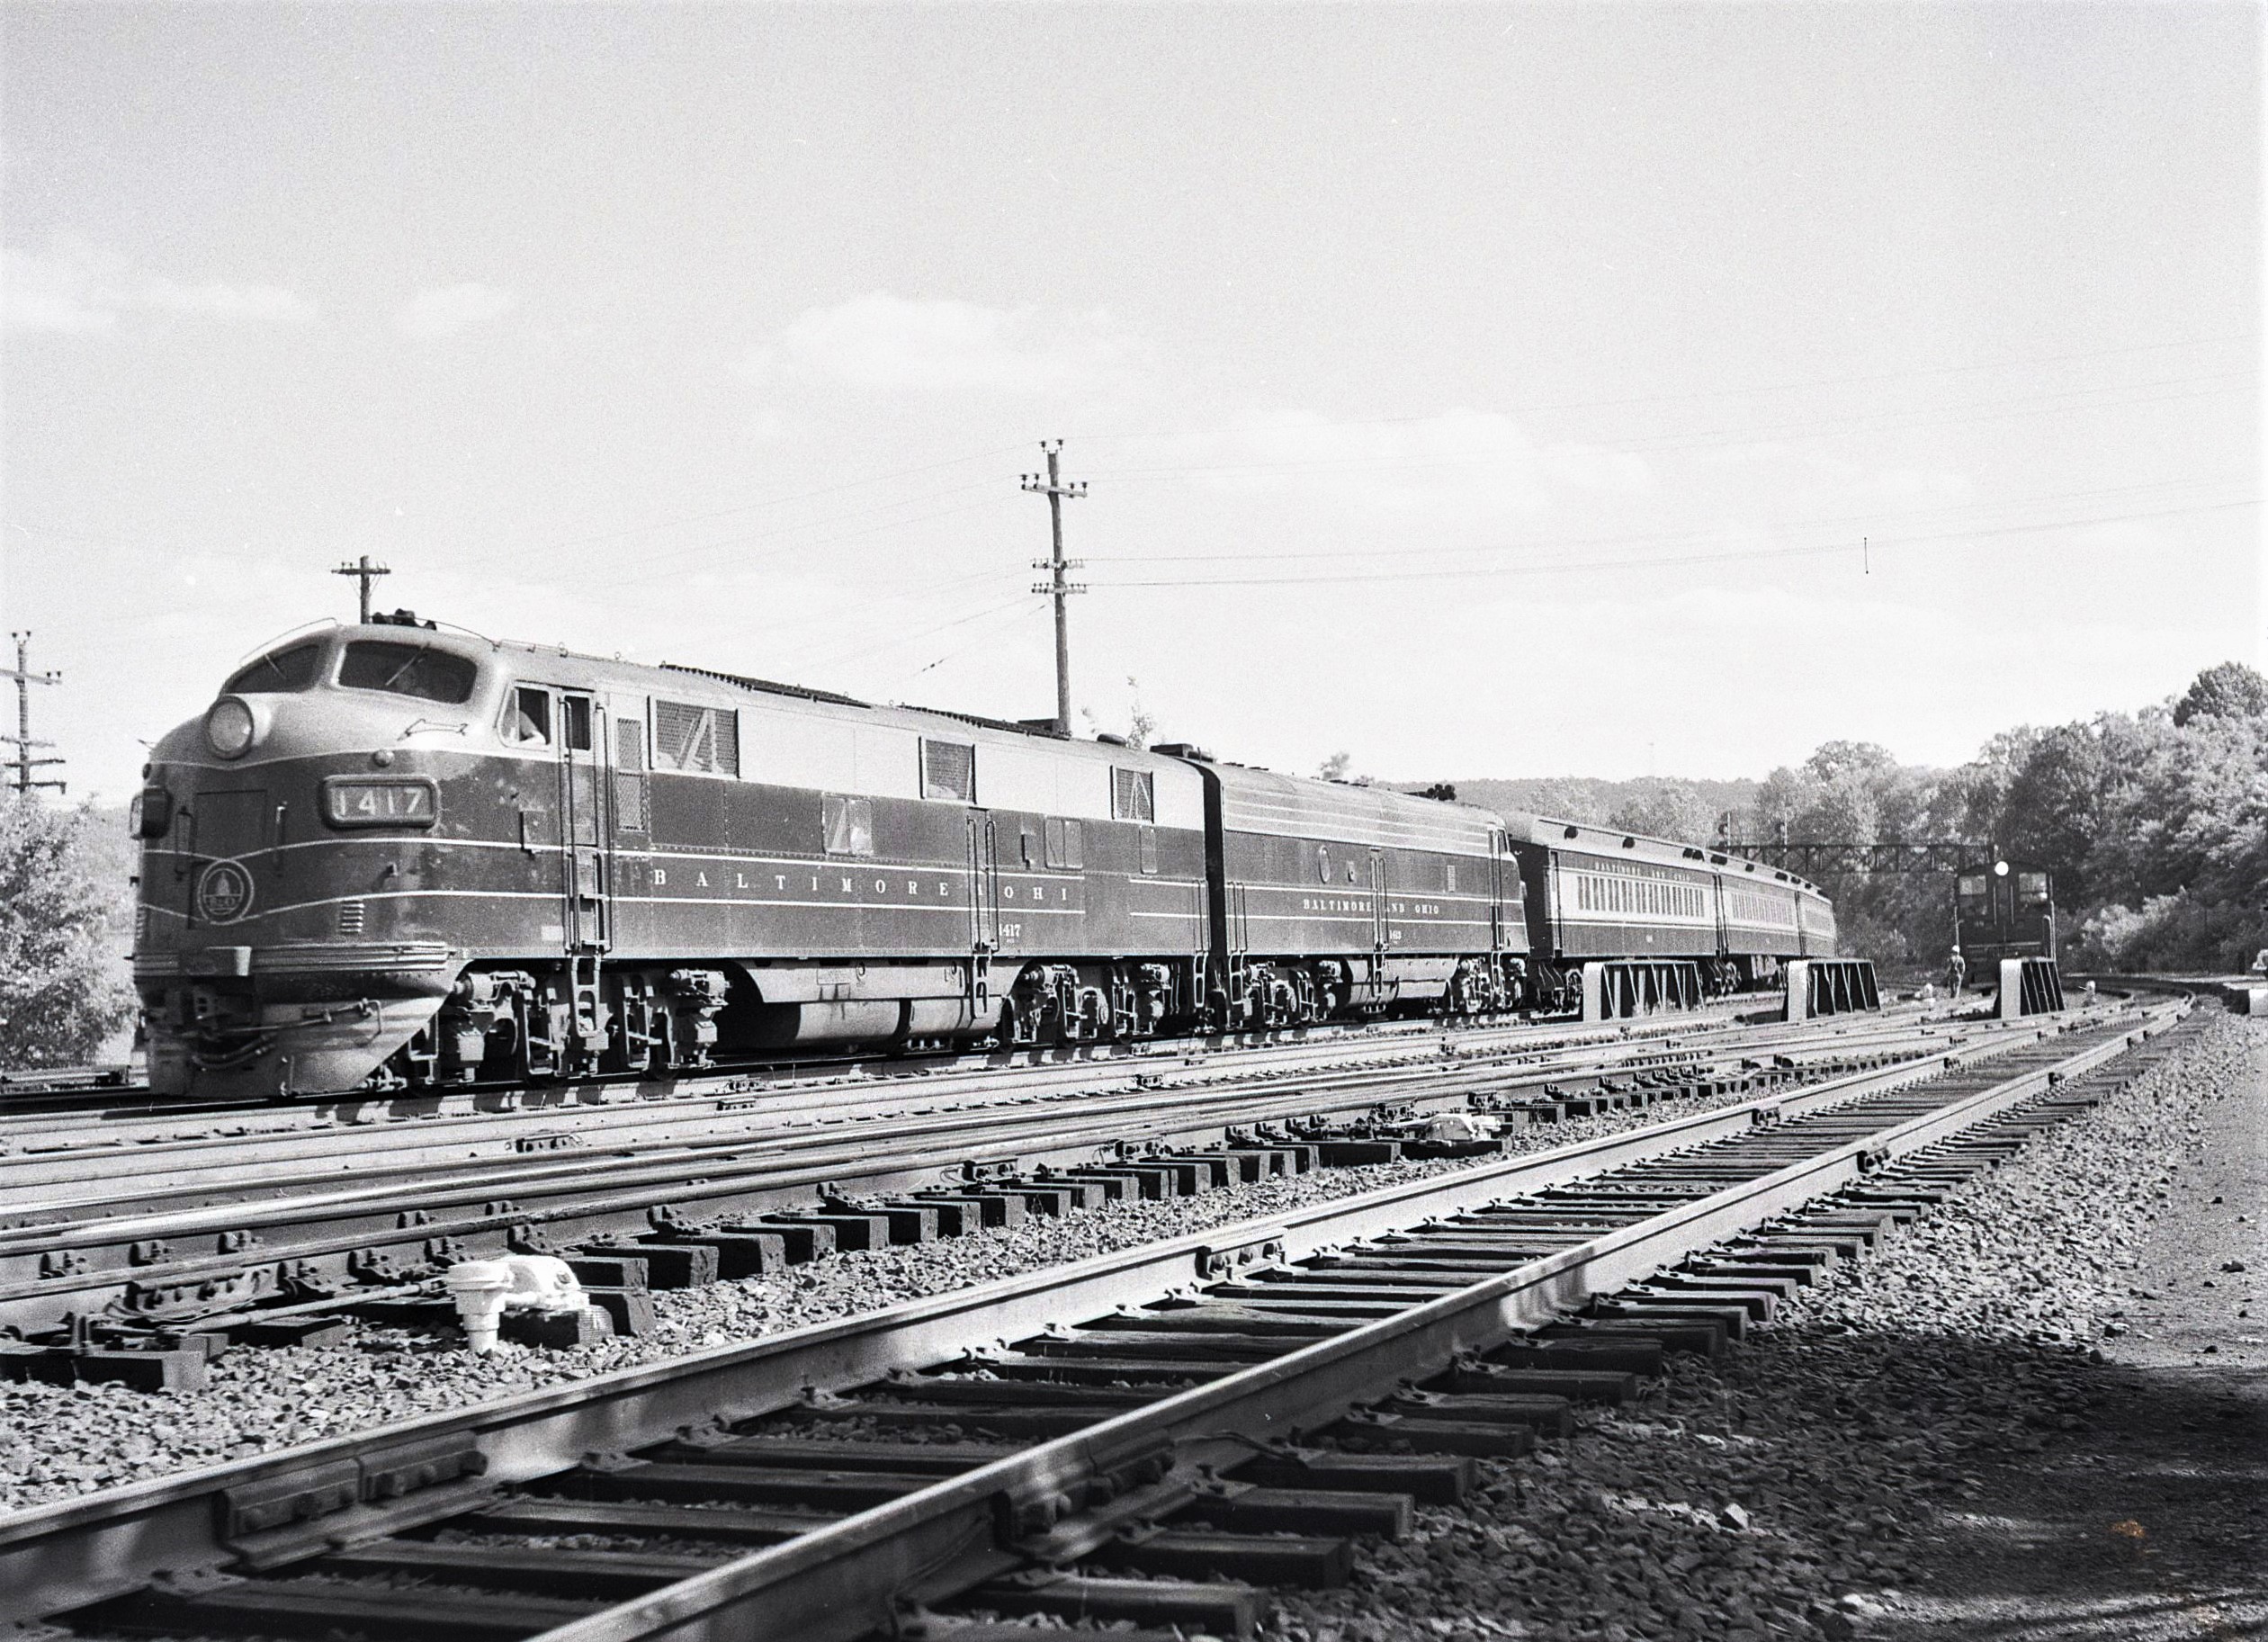 Baltimore and Ohio | Perkiomen Junction, Pennsylvania | E7a 1417 + 1 | Boy Scout Jamboree special train | July 10, 1957 | John Bowman, Jr. photo